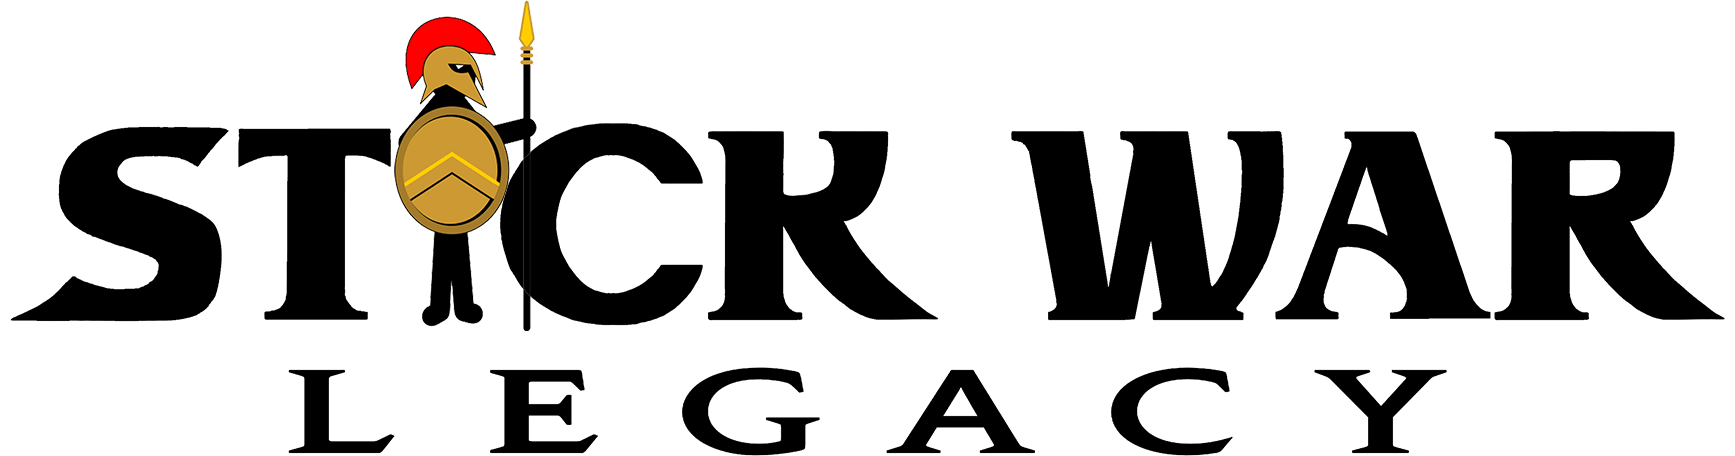 STICK WAR LEGACY 2 free online game on